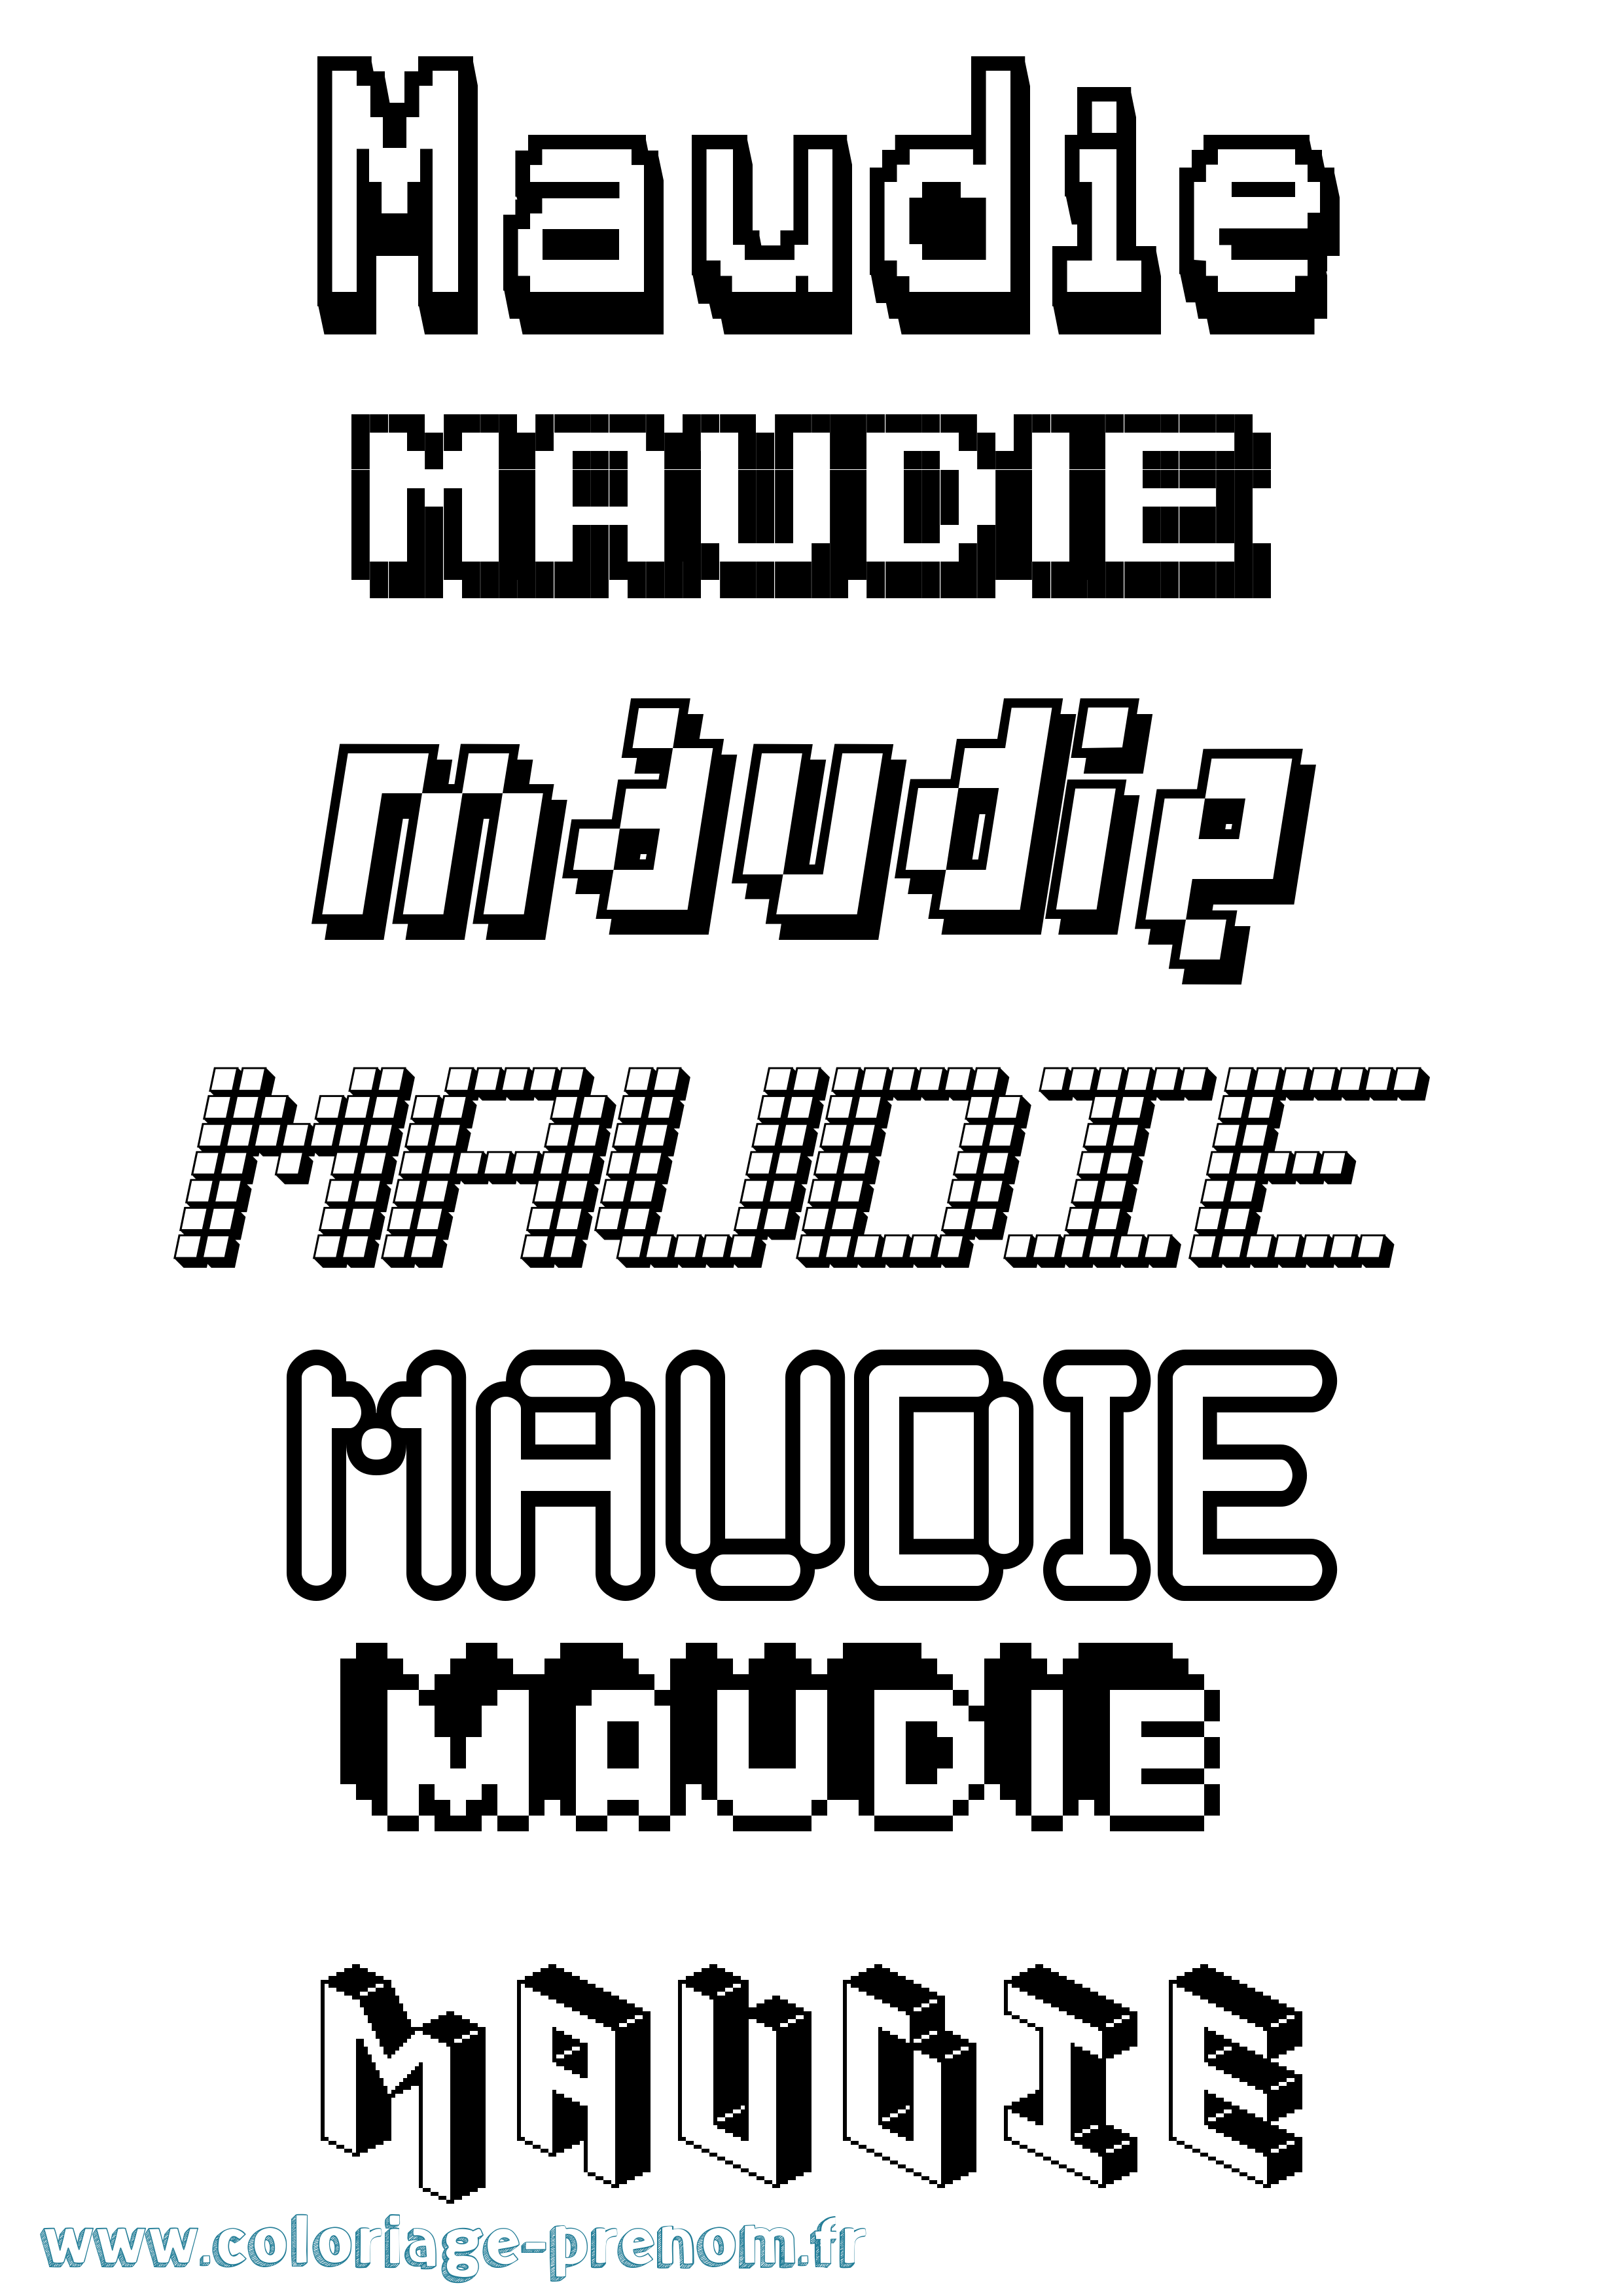 Coloriage prénom Maudie Pixel